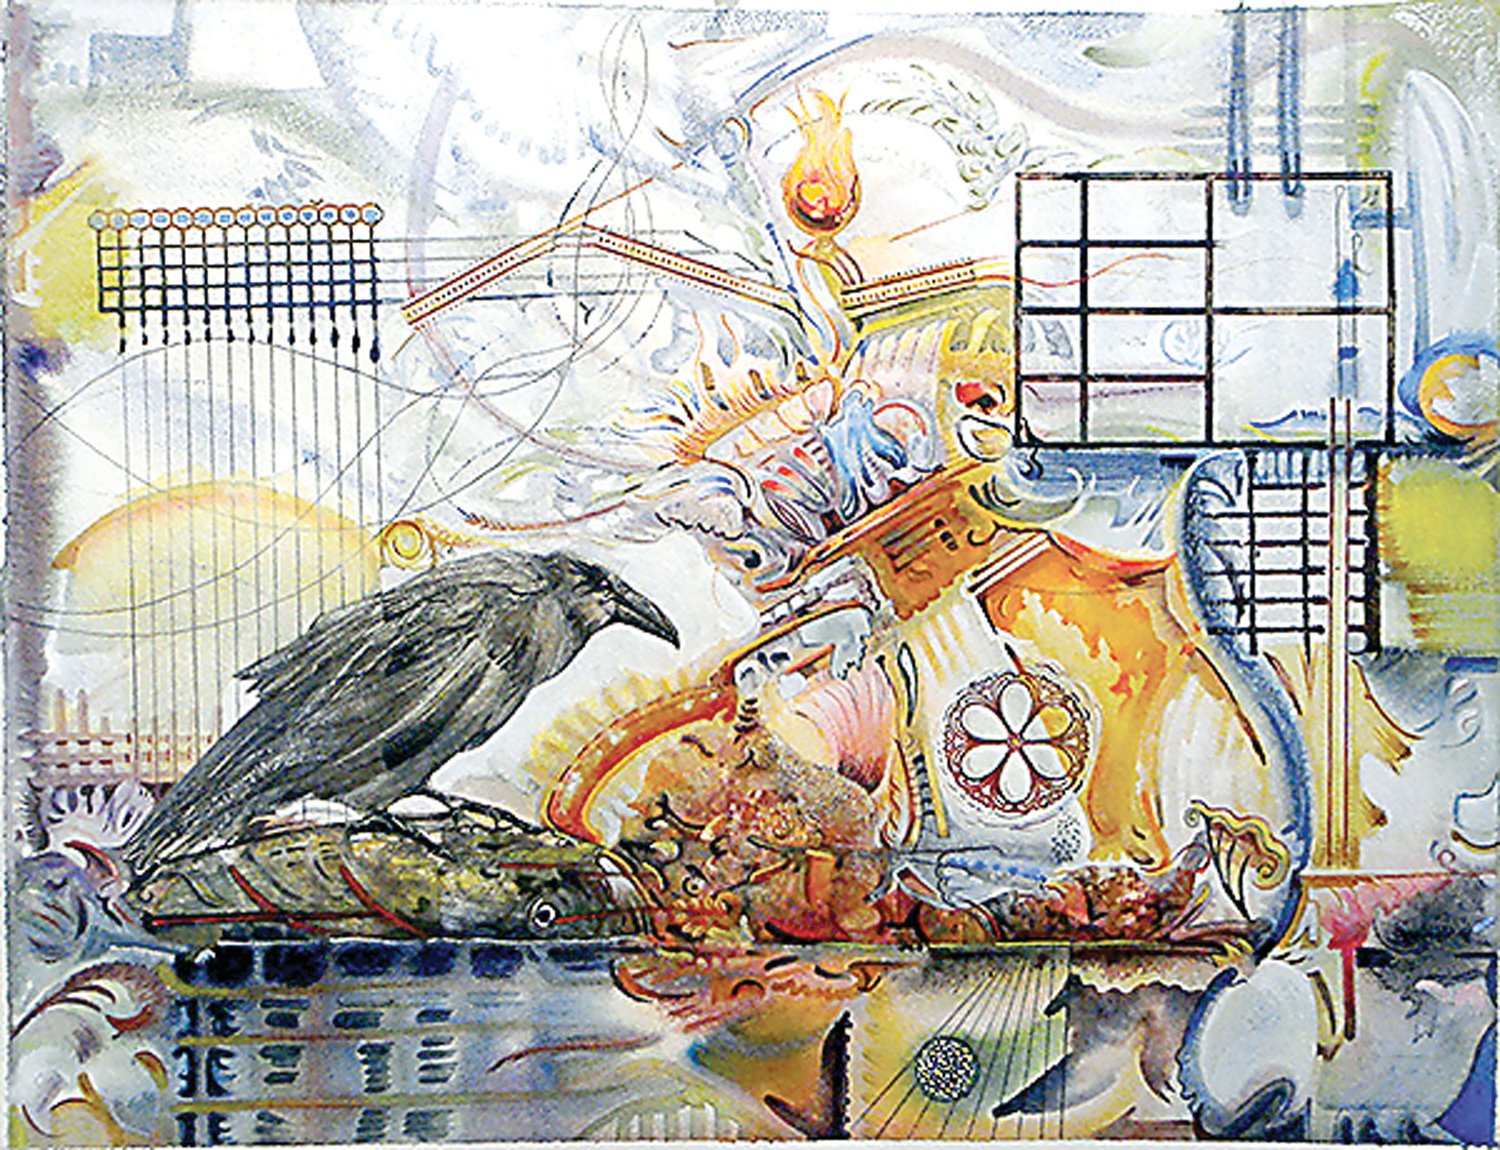 “Royal Birds” is by Annelies van Dommelen.